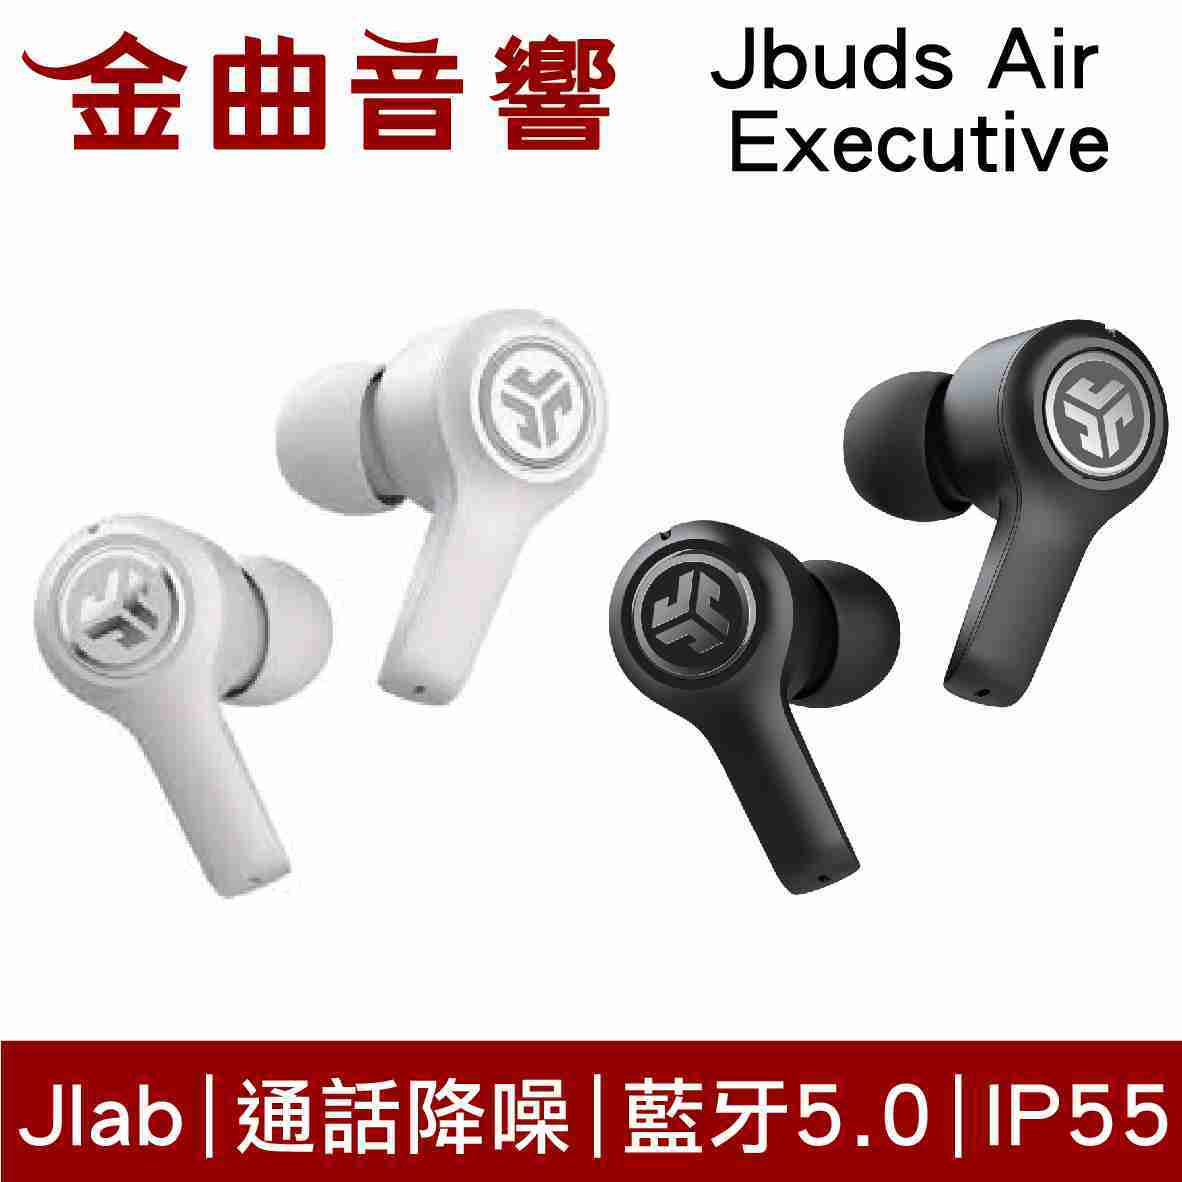 JLab Jbuds Air Executive 黑白兩色 真無線 藍芽耳機 | 金曲音響